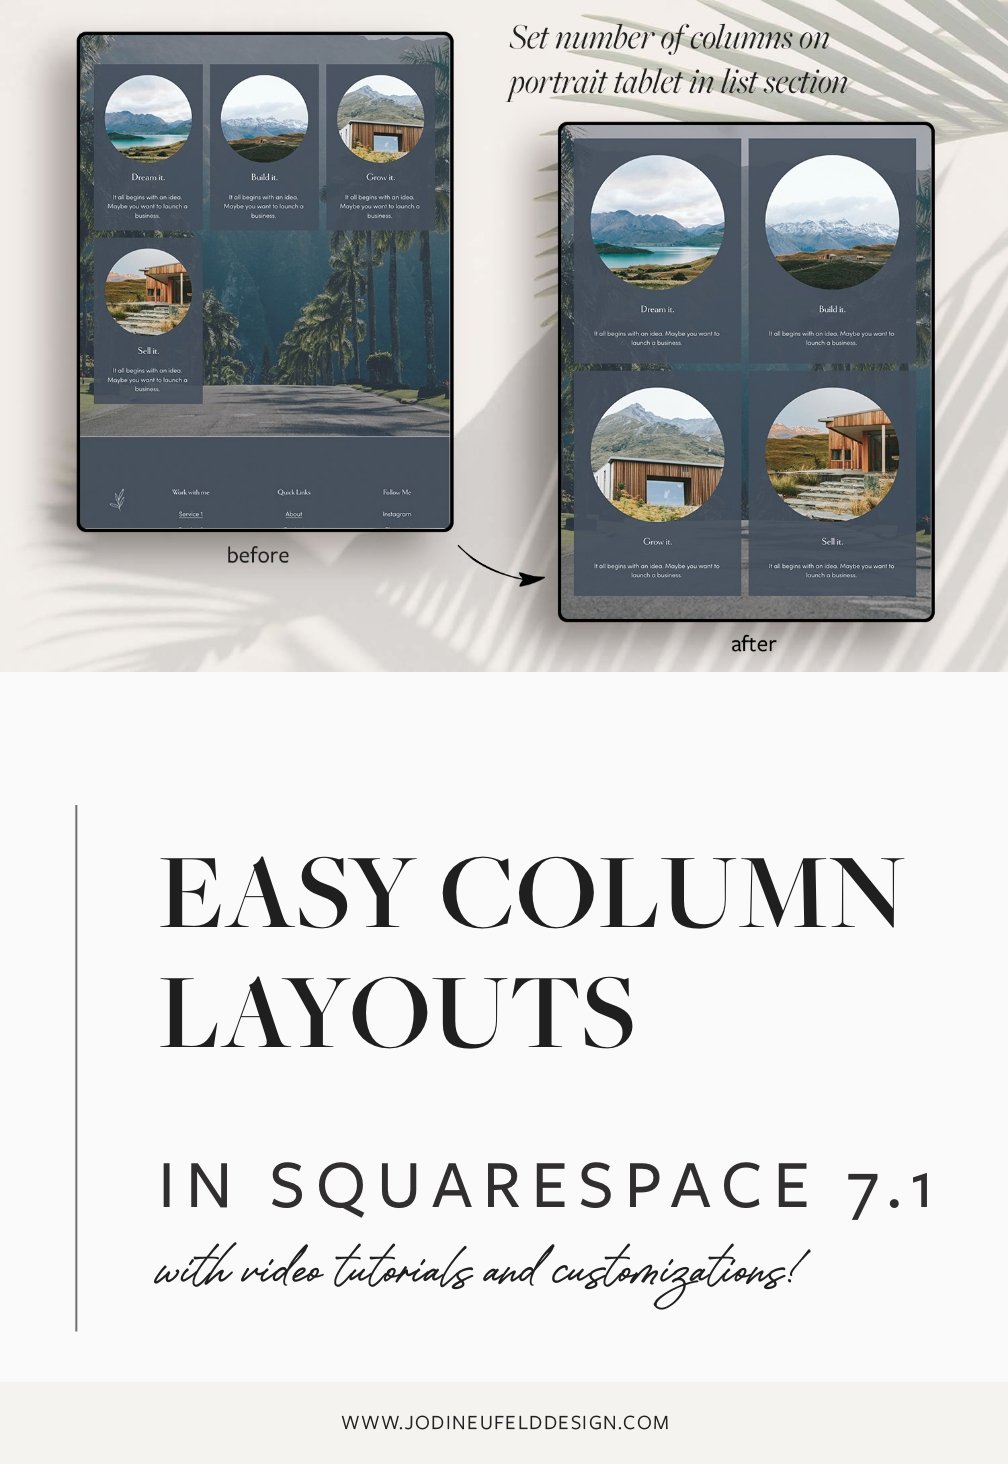 Easy columns in Squarespace 7.1 by Jodi Neufeld Design | pinterest graphic 2